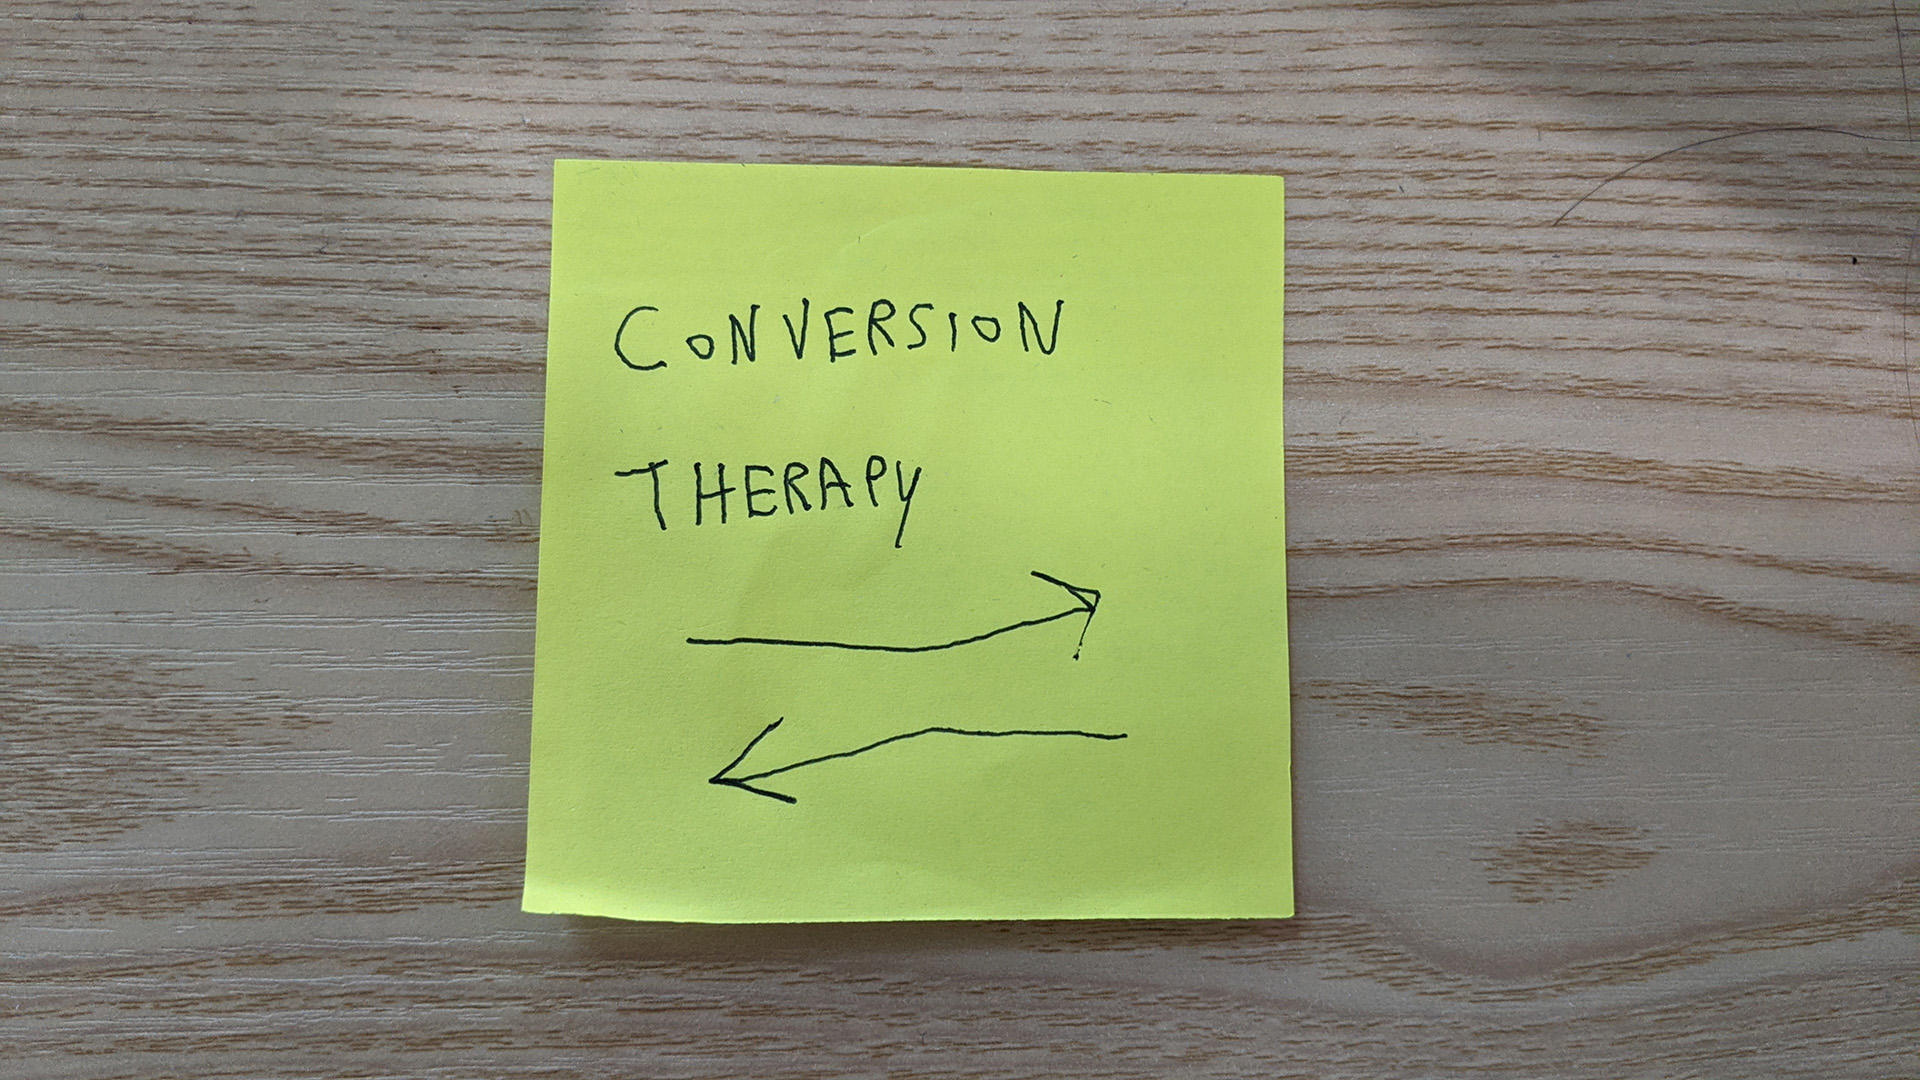 Conversion Therapy